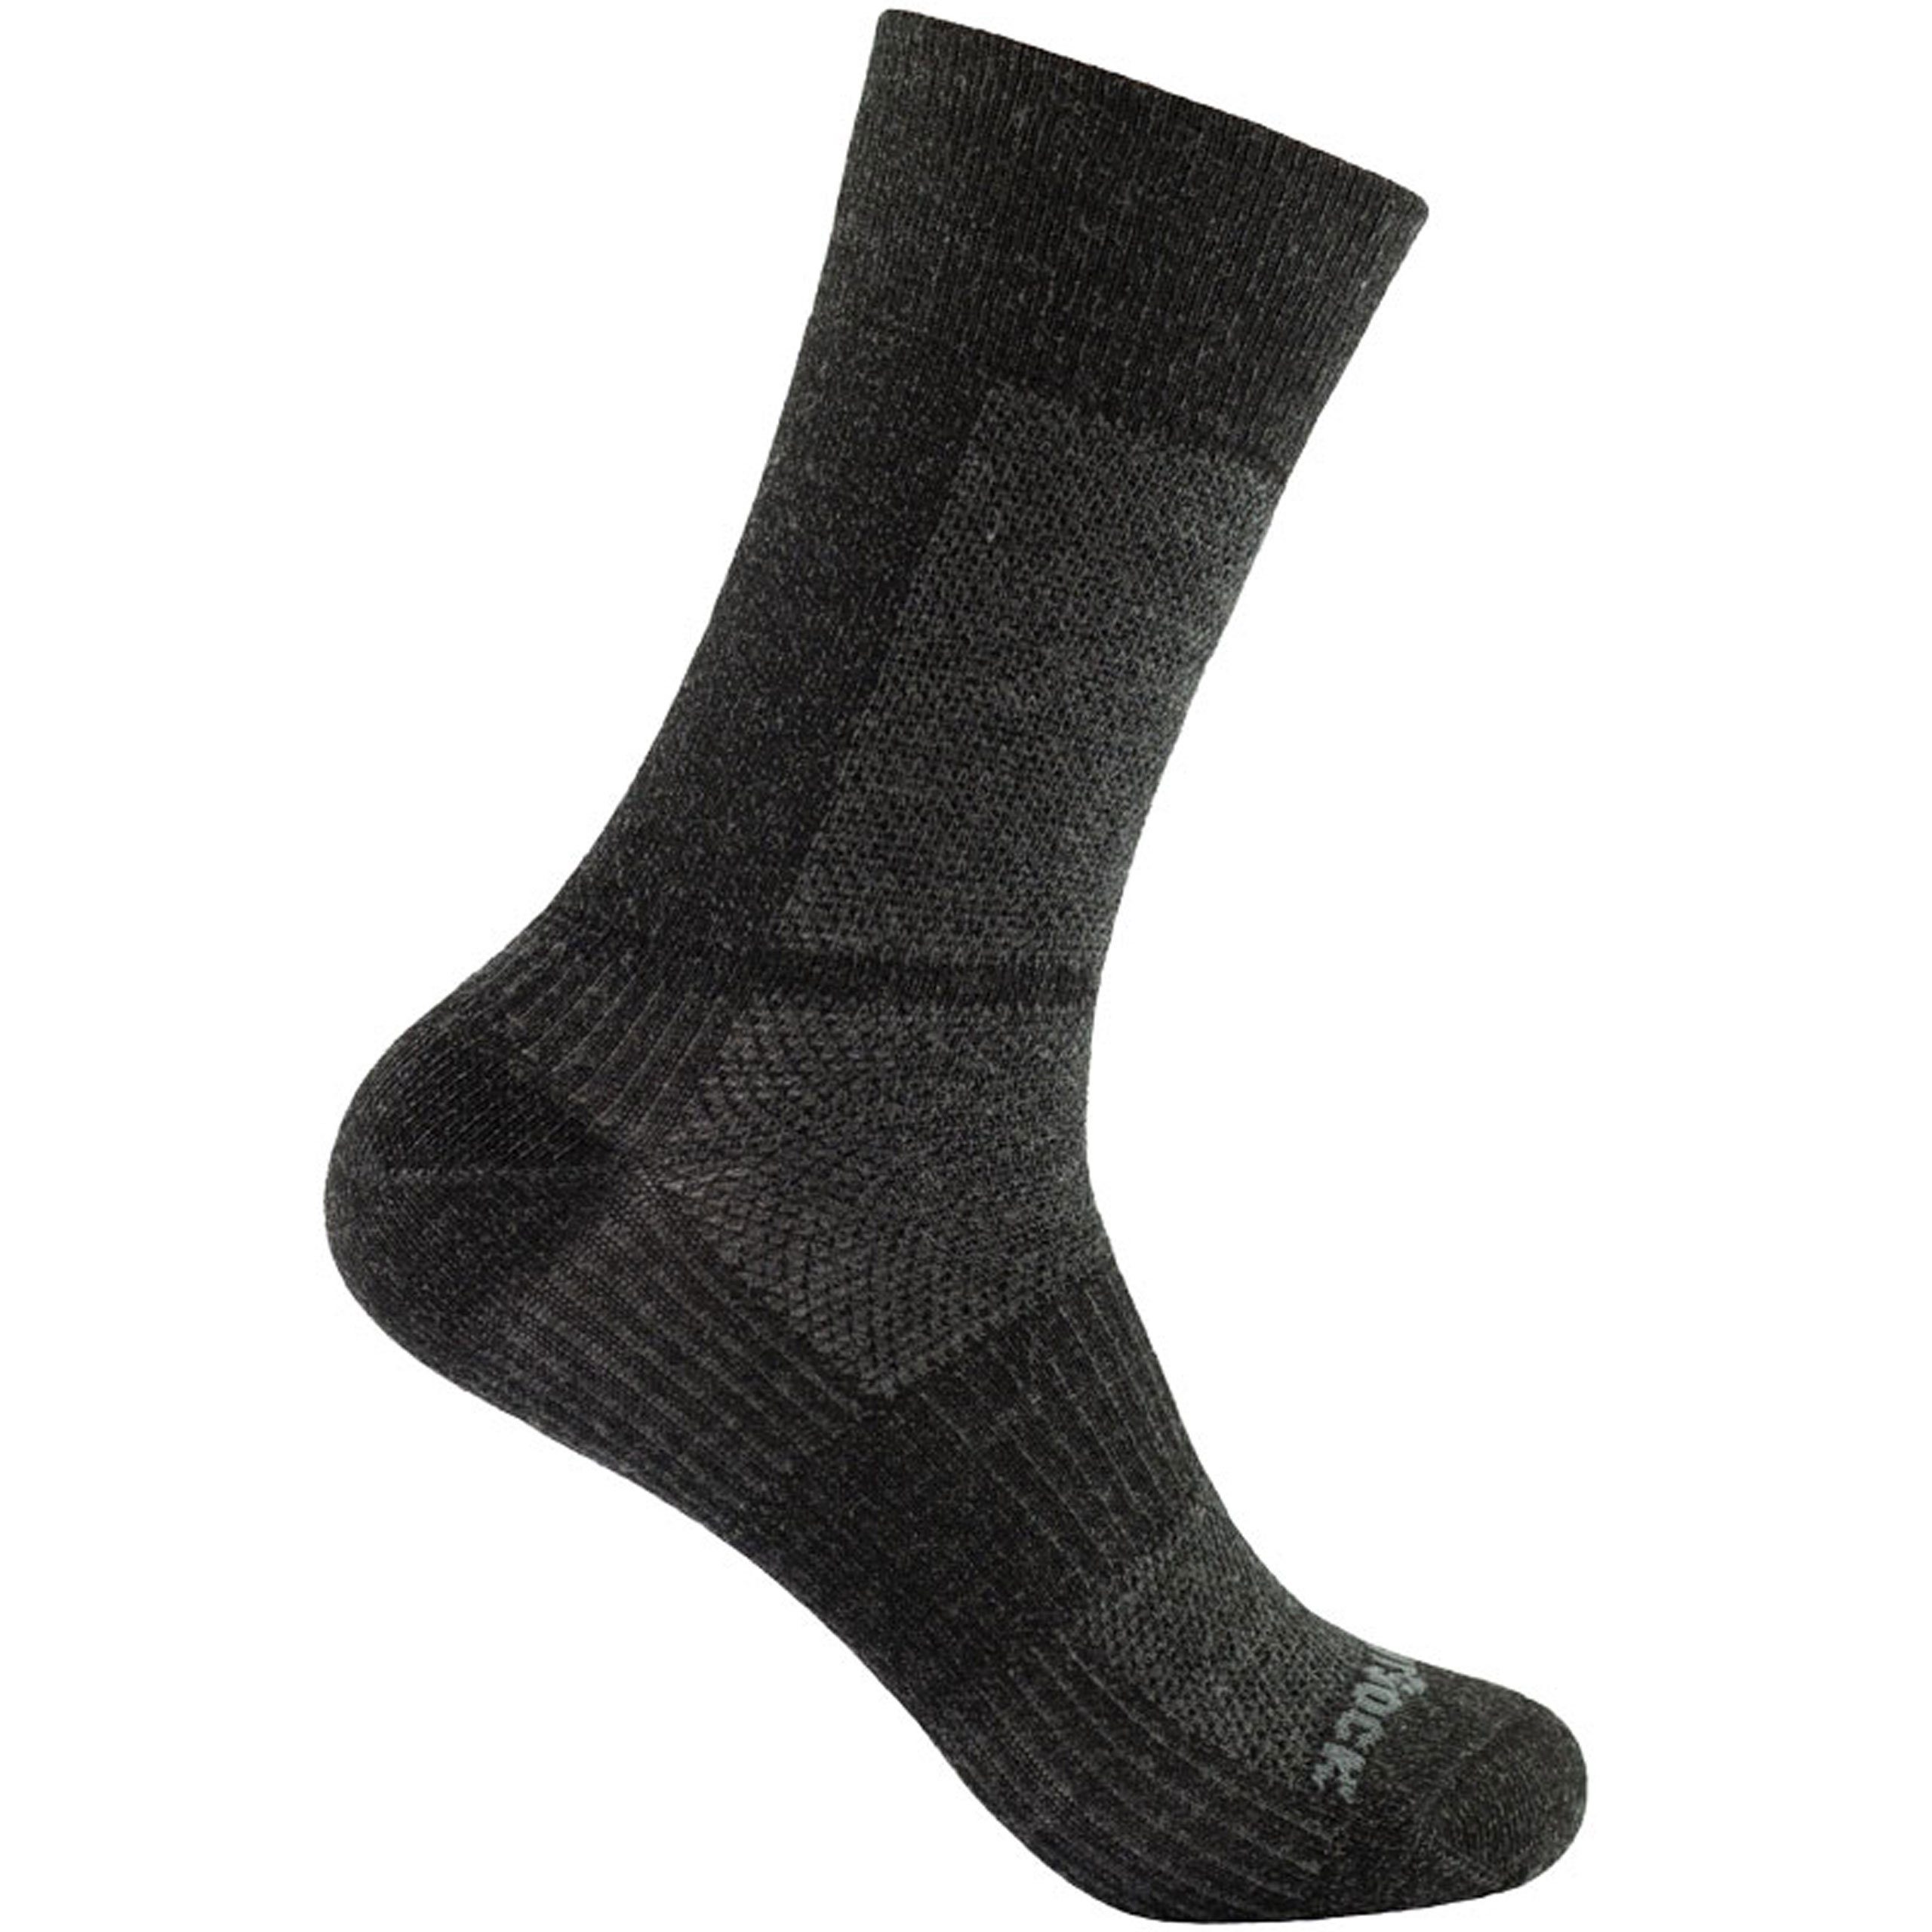 Socken - II greyblack Merino Wrightsock WRIGHT Laufschuh doppellagige Unisex SOCKS Coolmesh